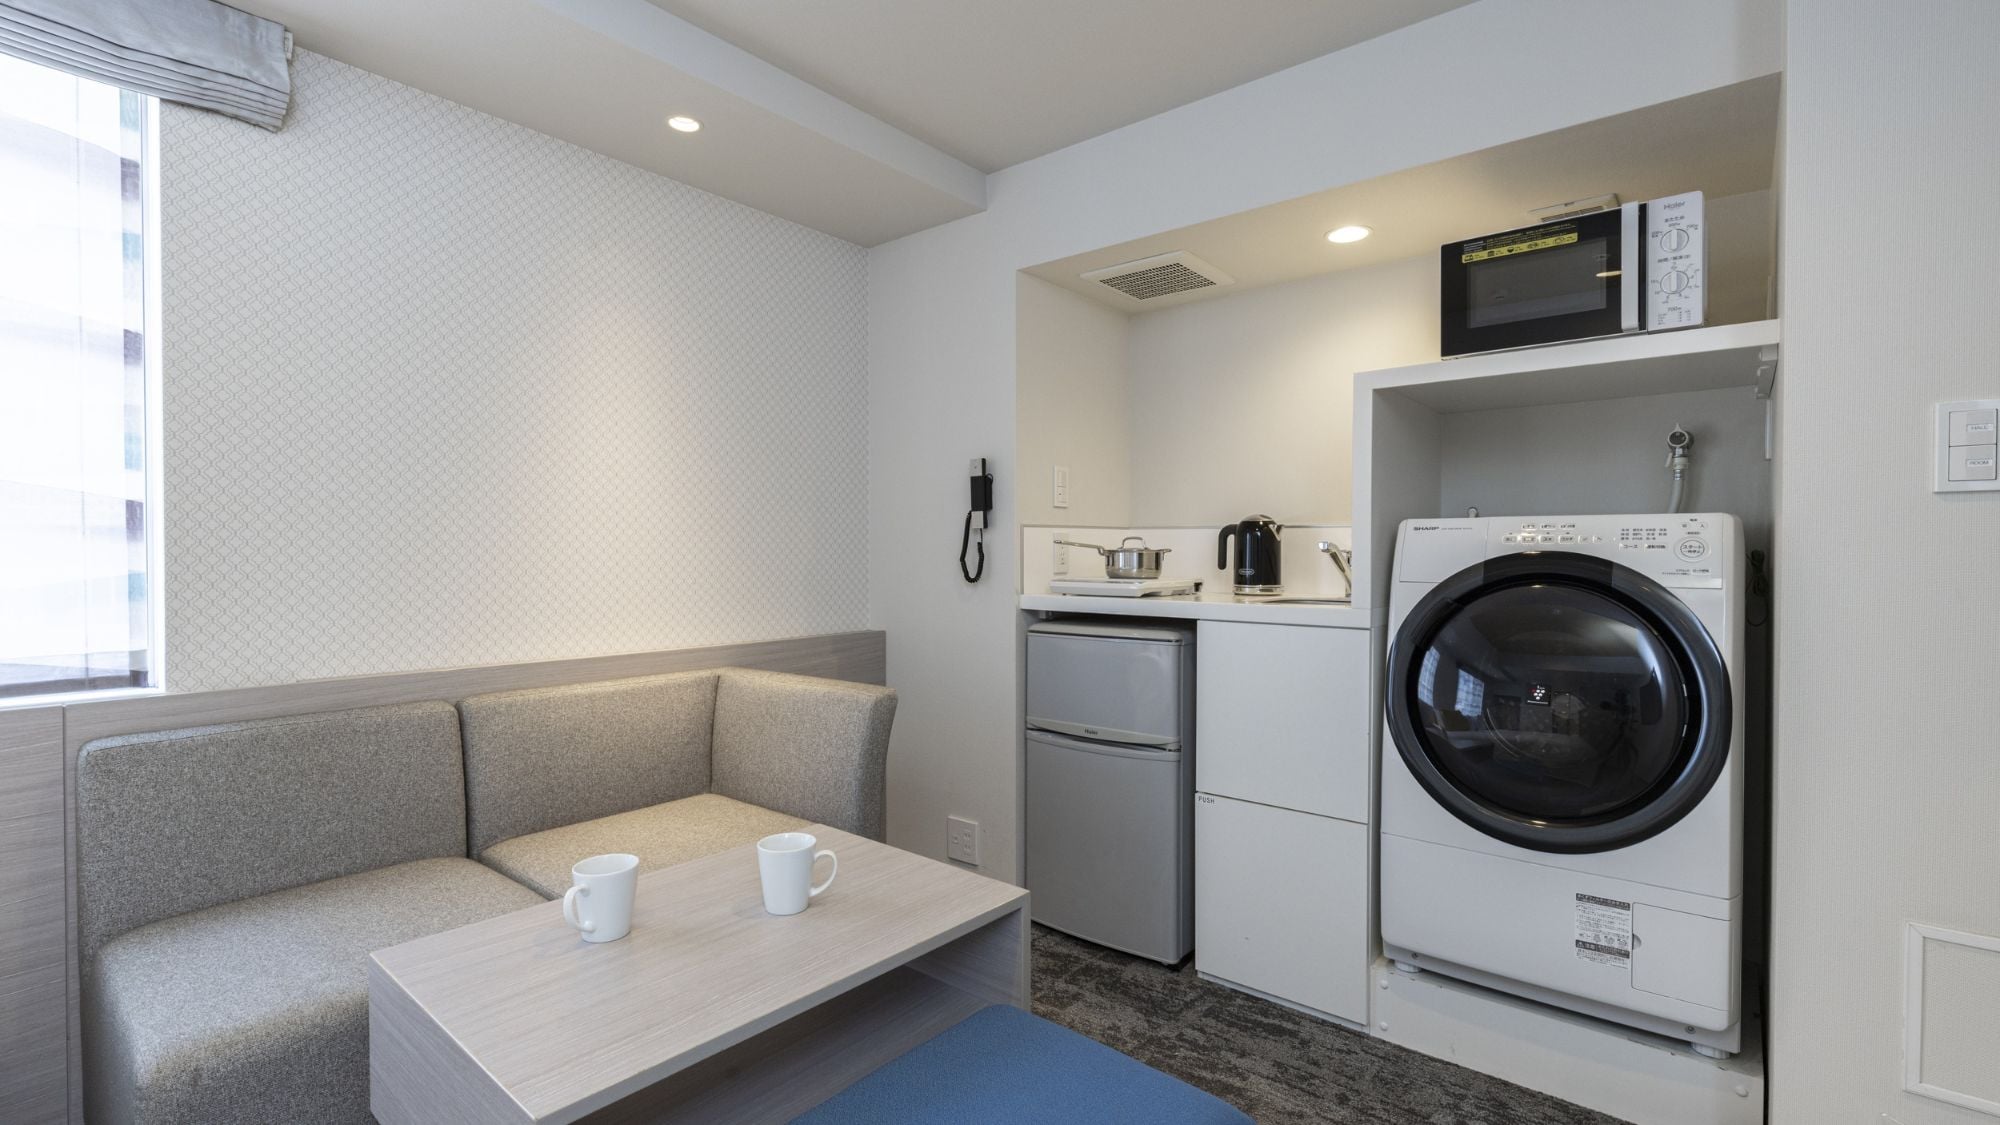 ◆Superior Twin Room 23m2 | Mini kitchen, washer/dryer